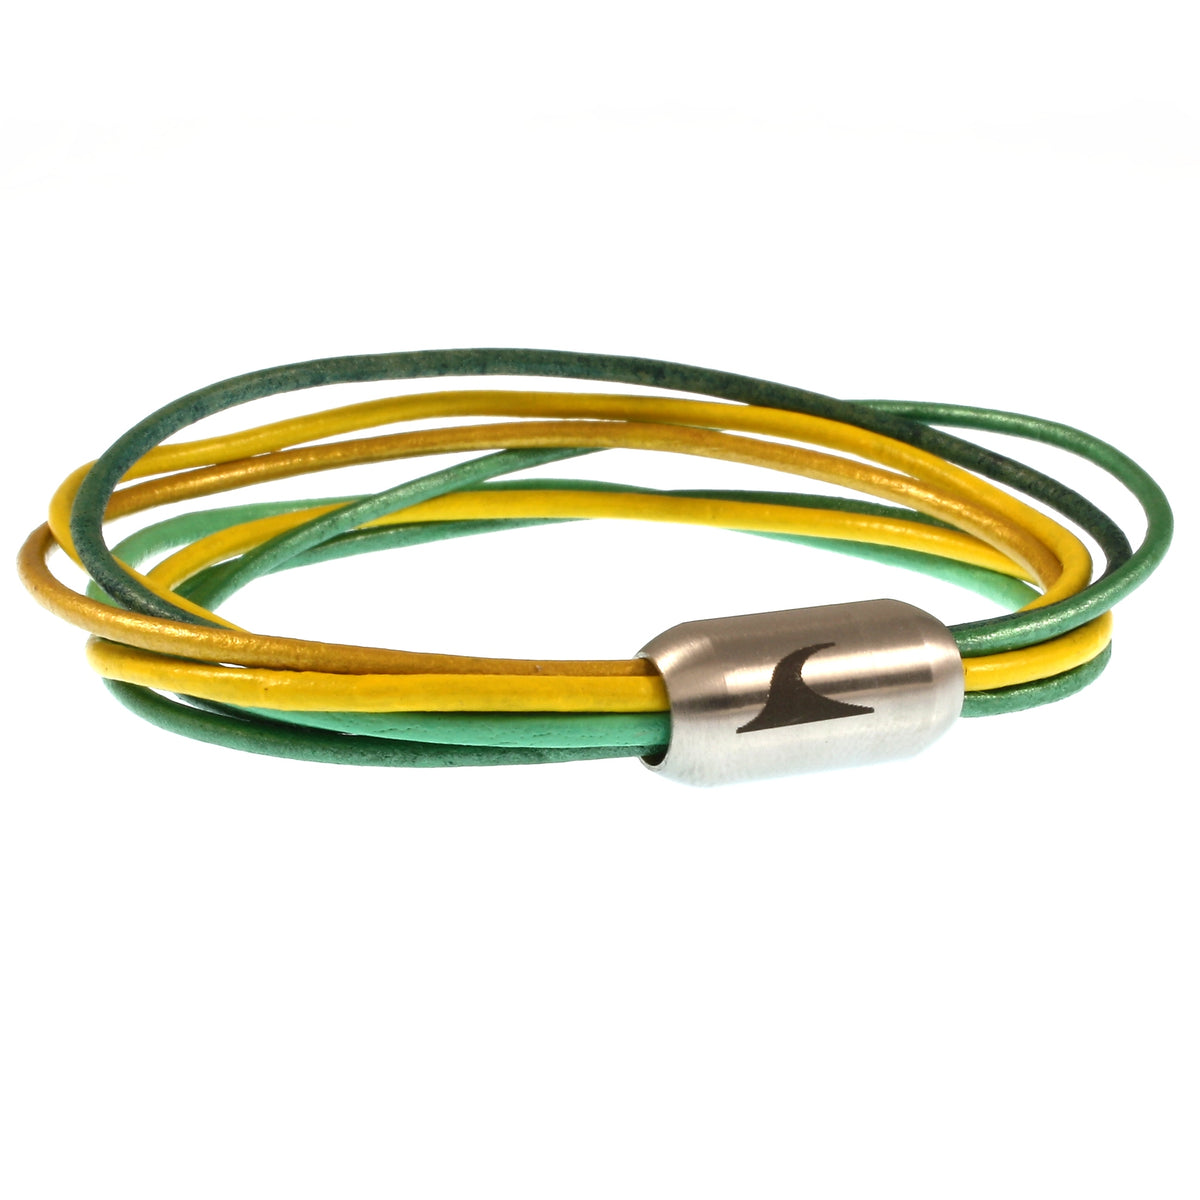 Damen-Leder-armband-fem-jungle-gelb-gruen-silber-Edelstahlverschluss-vorn-wavepirate-shop-r